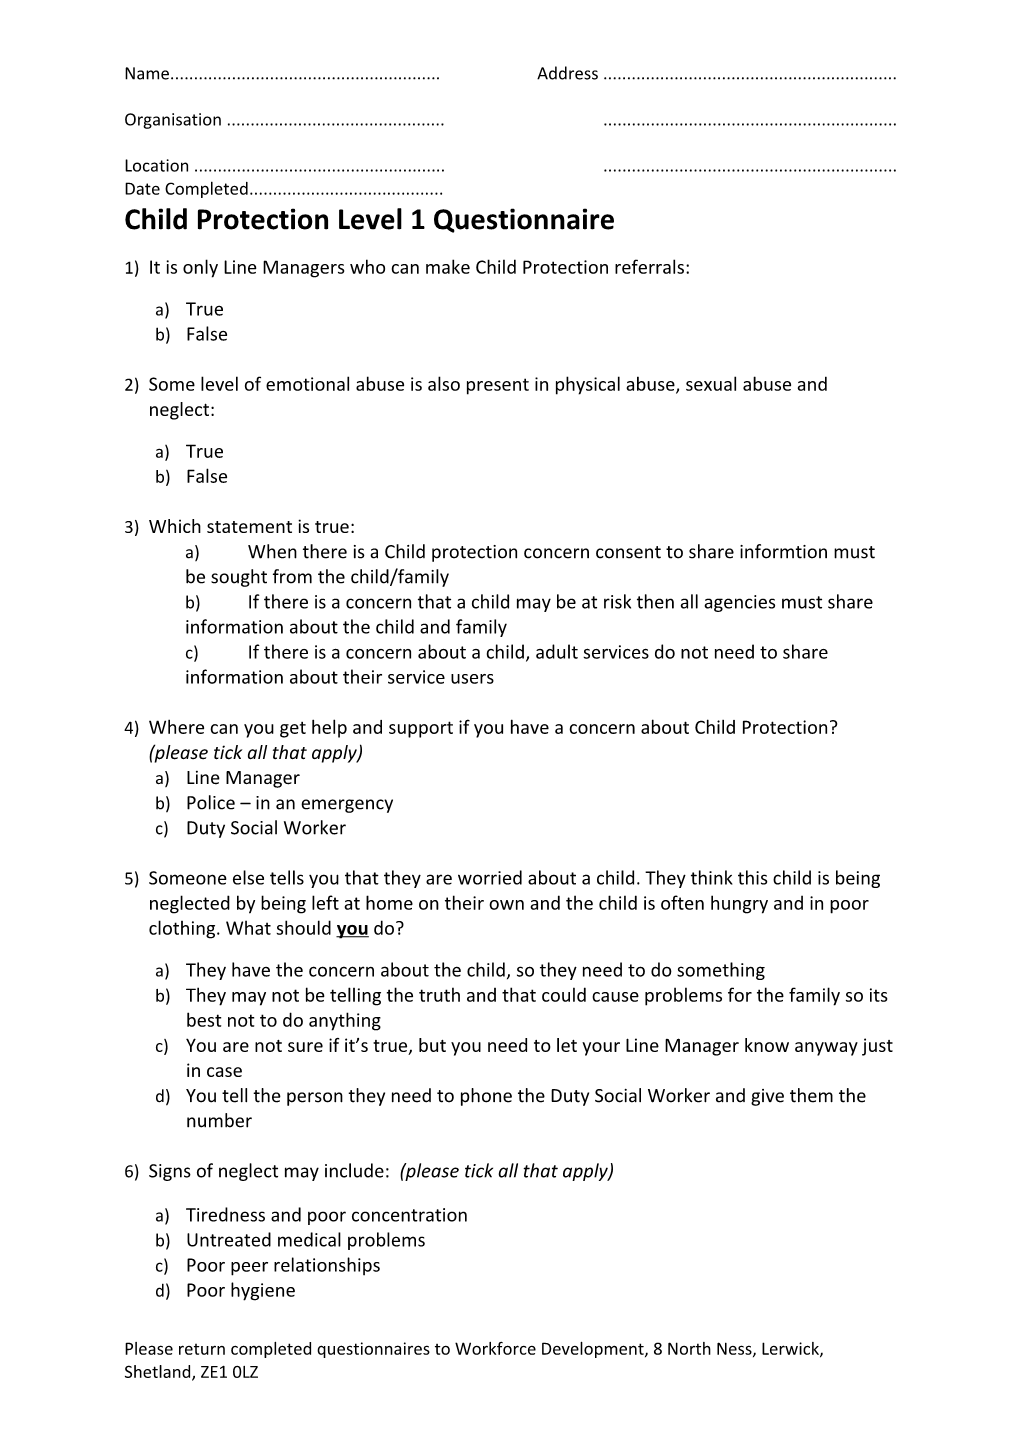 Child Protection Level 1 Questionnaire